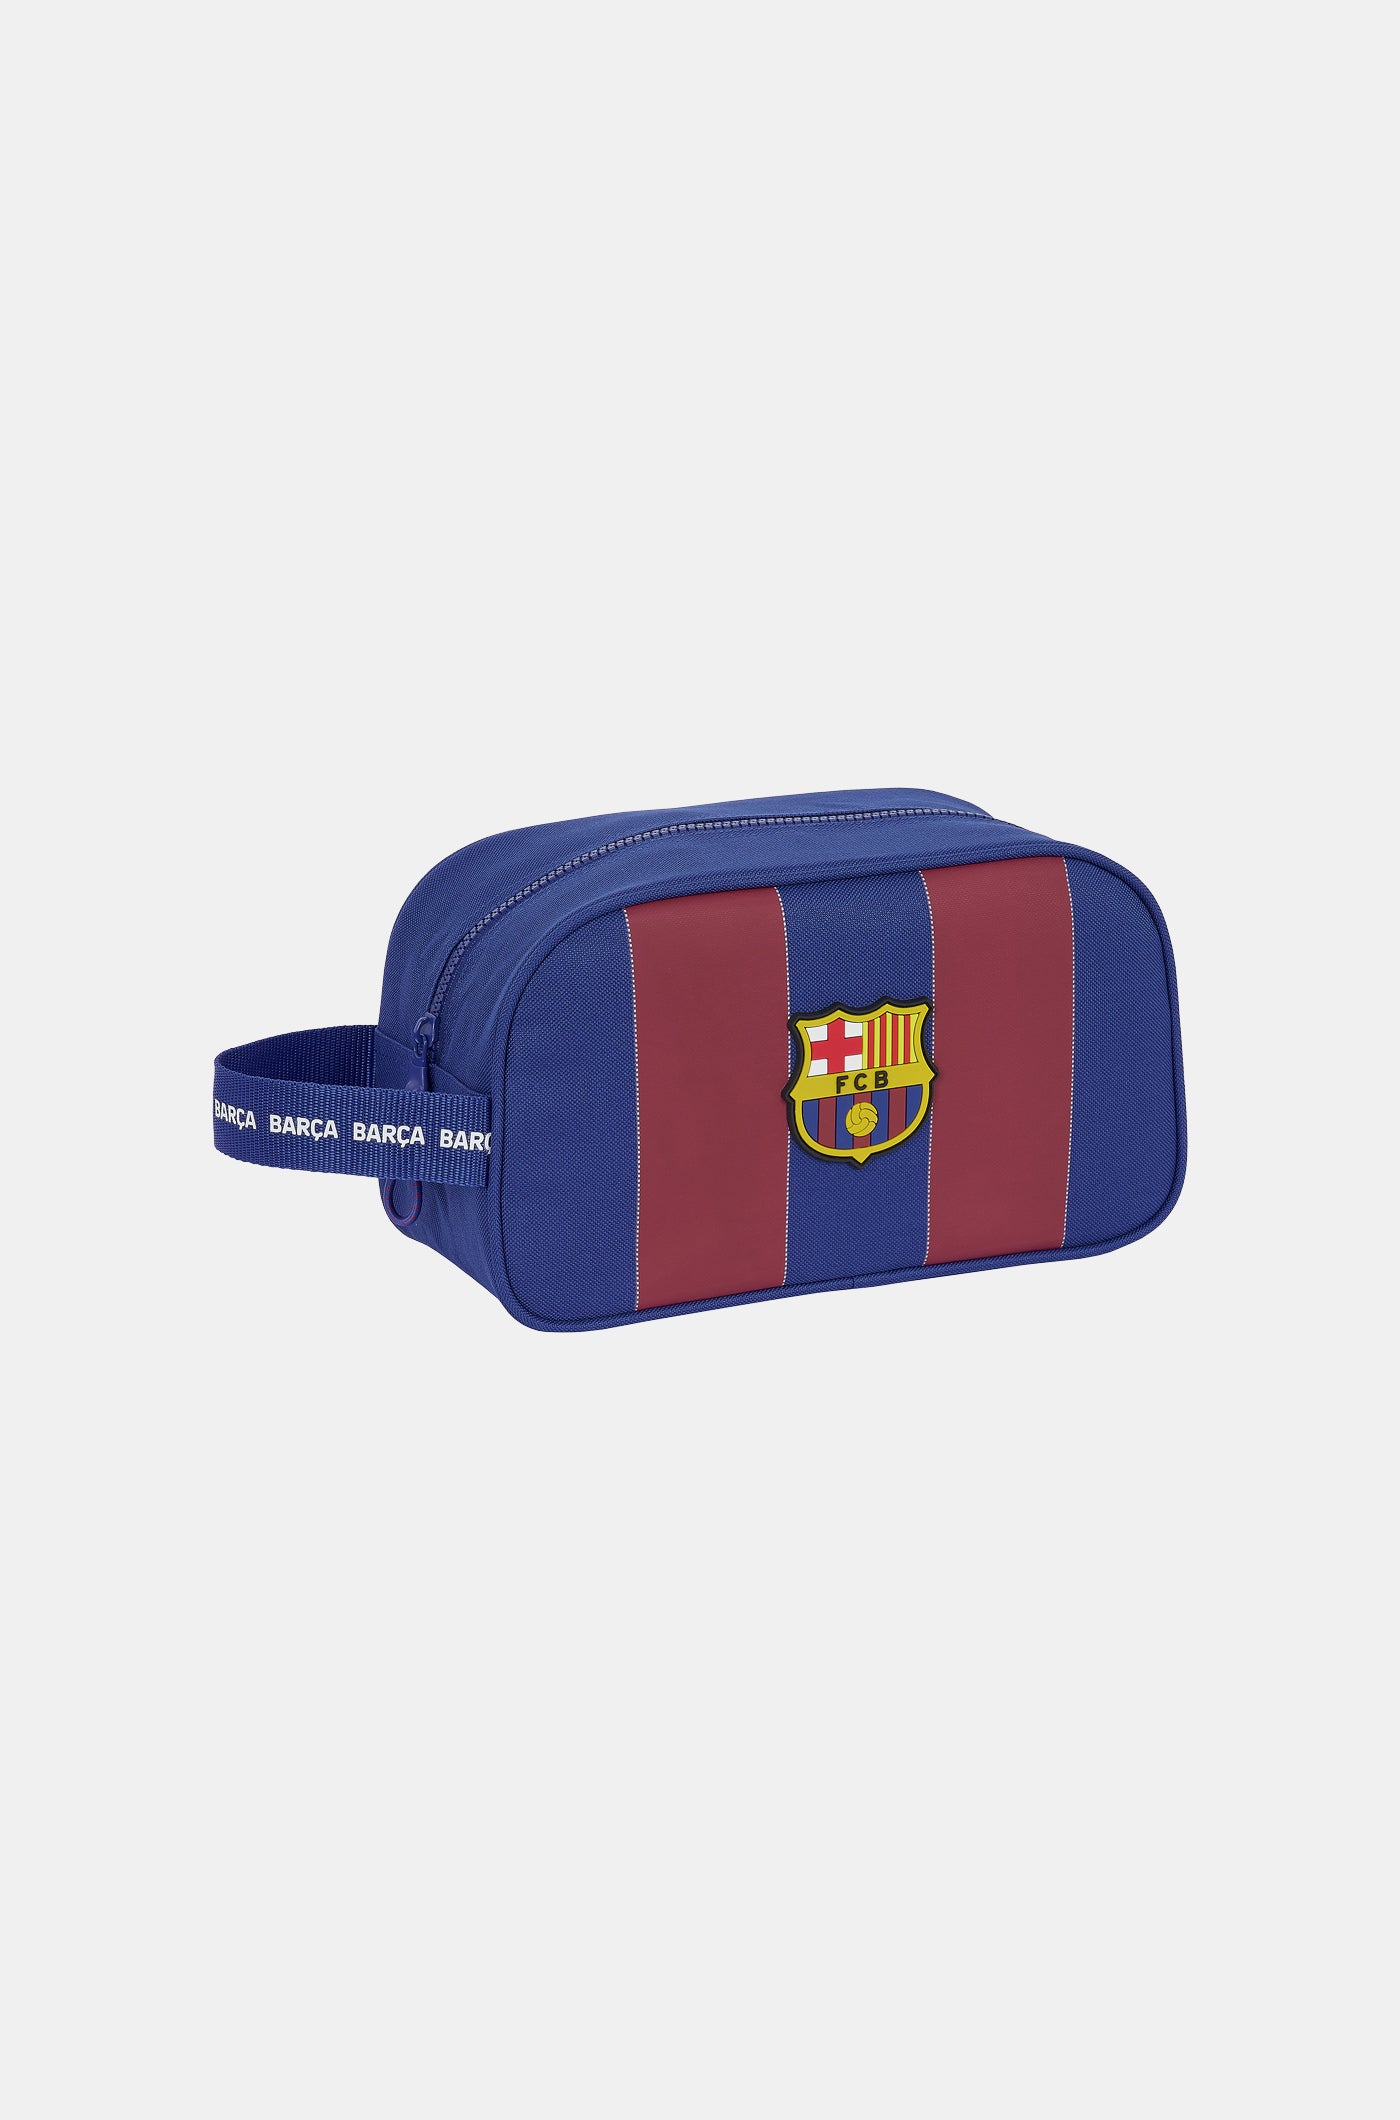 Regalos por precio – Barça Official Store Spotify Camp Nou